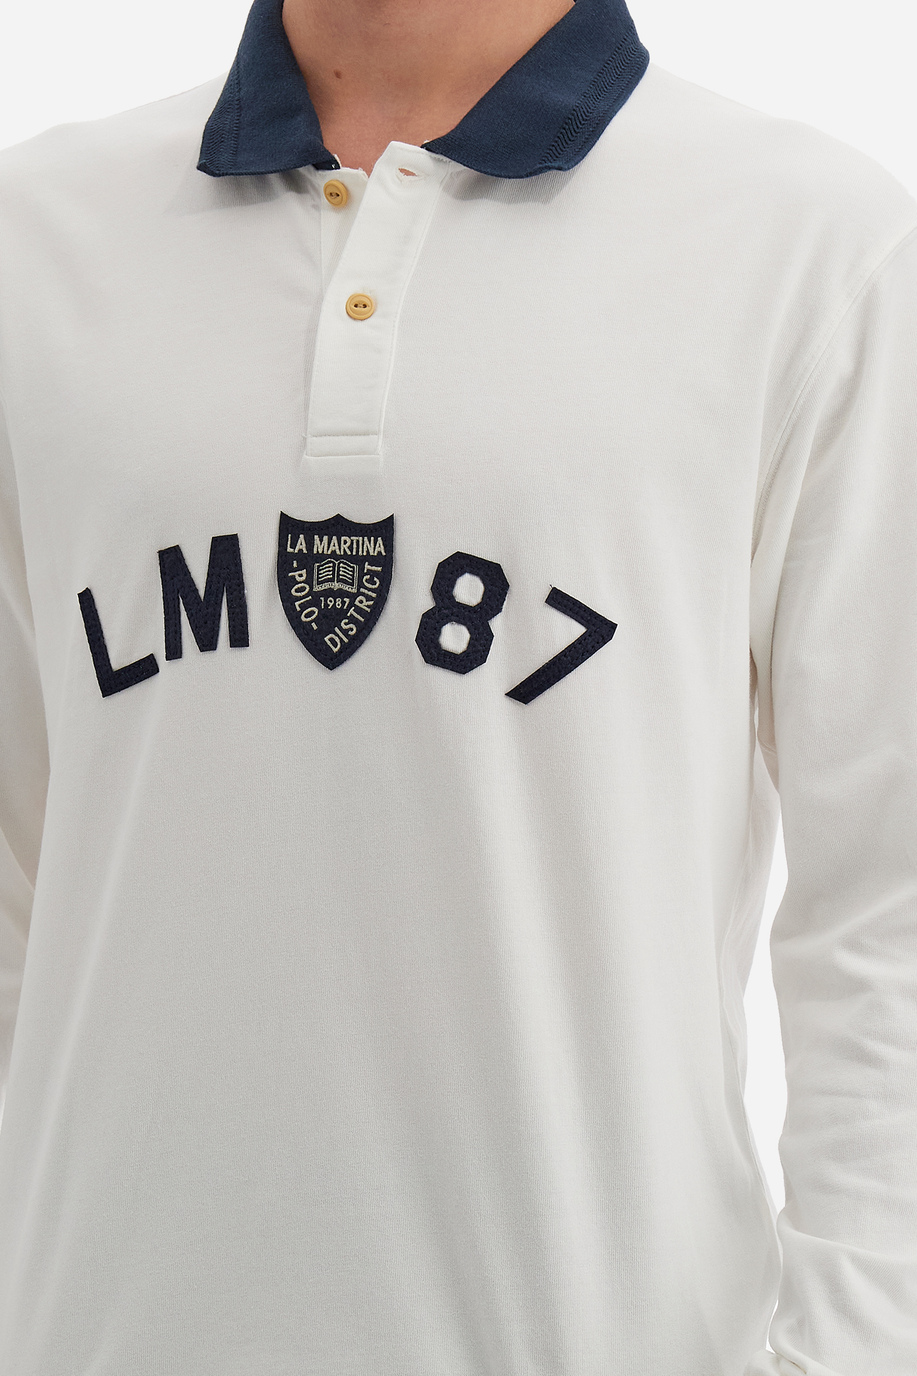 Polo Academy men's long-sleeved polo shirt with small contrasting collar logo - Vardis - Long Sleeve | La Martina - Official Online Shop